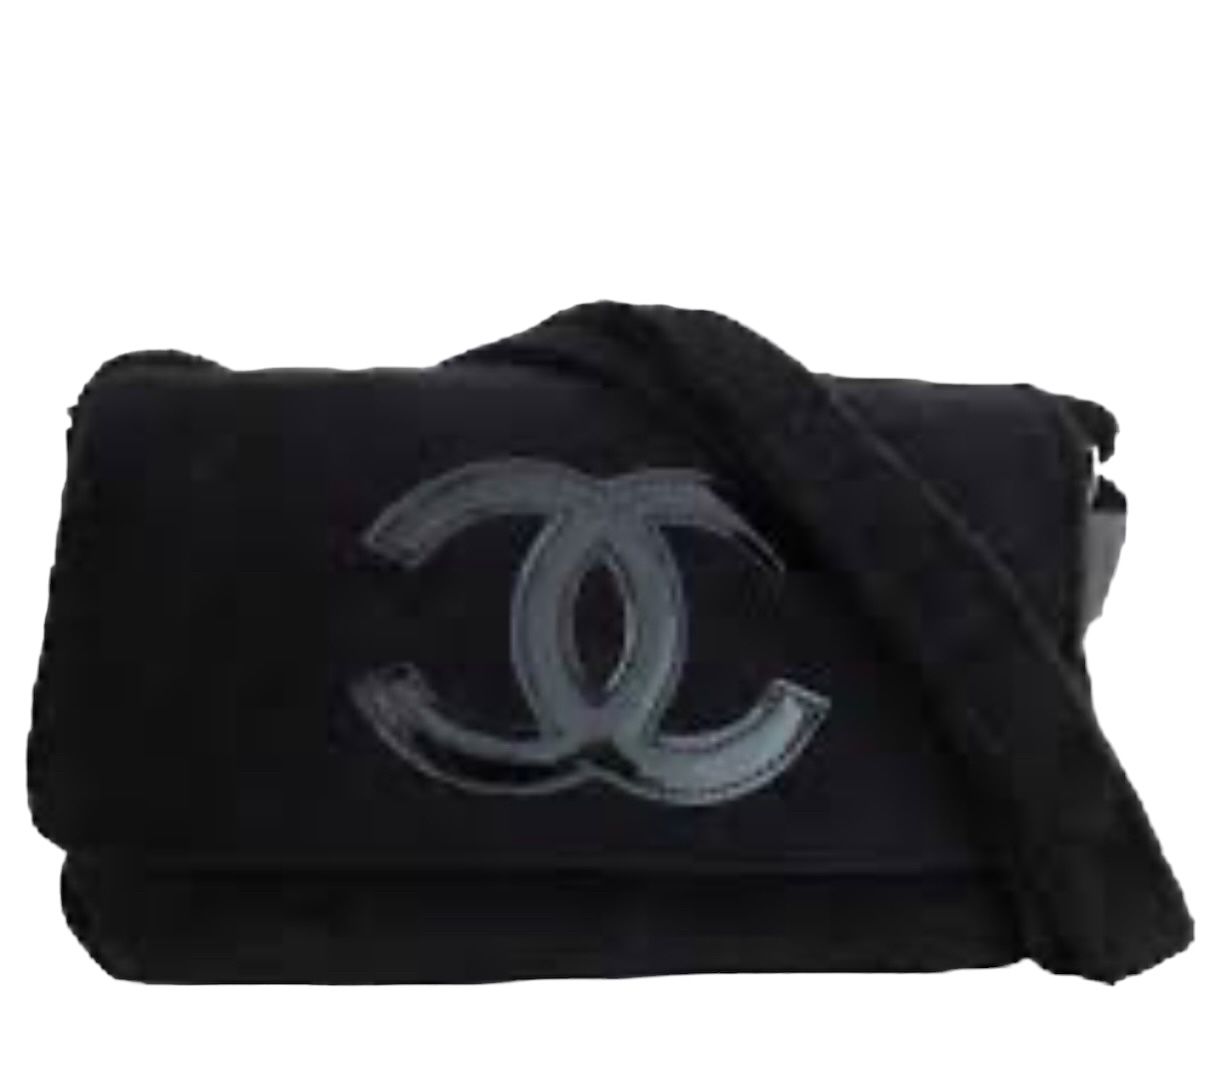 Chanel Precision Bag Novelty Item